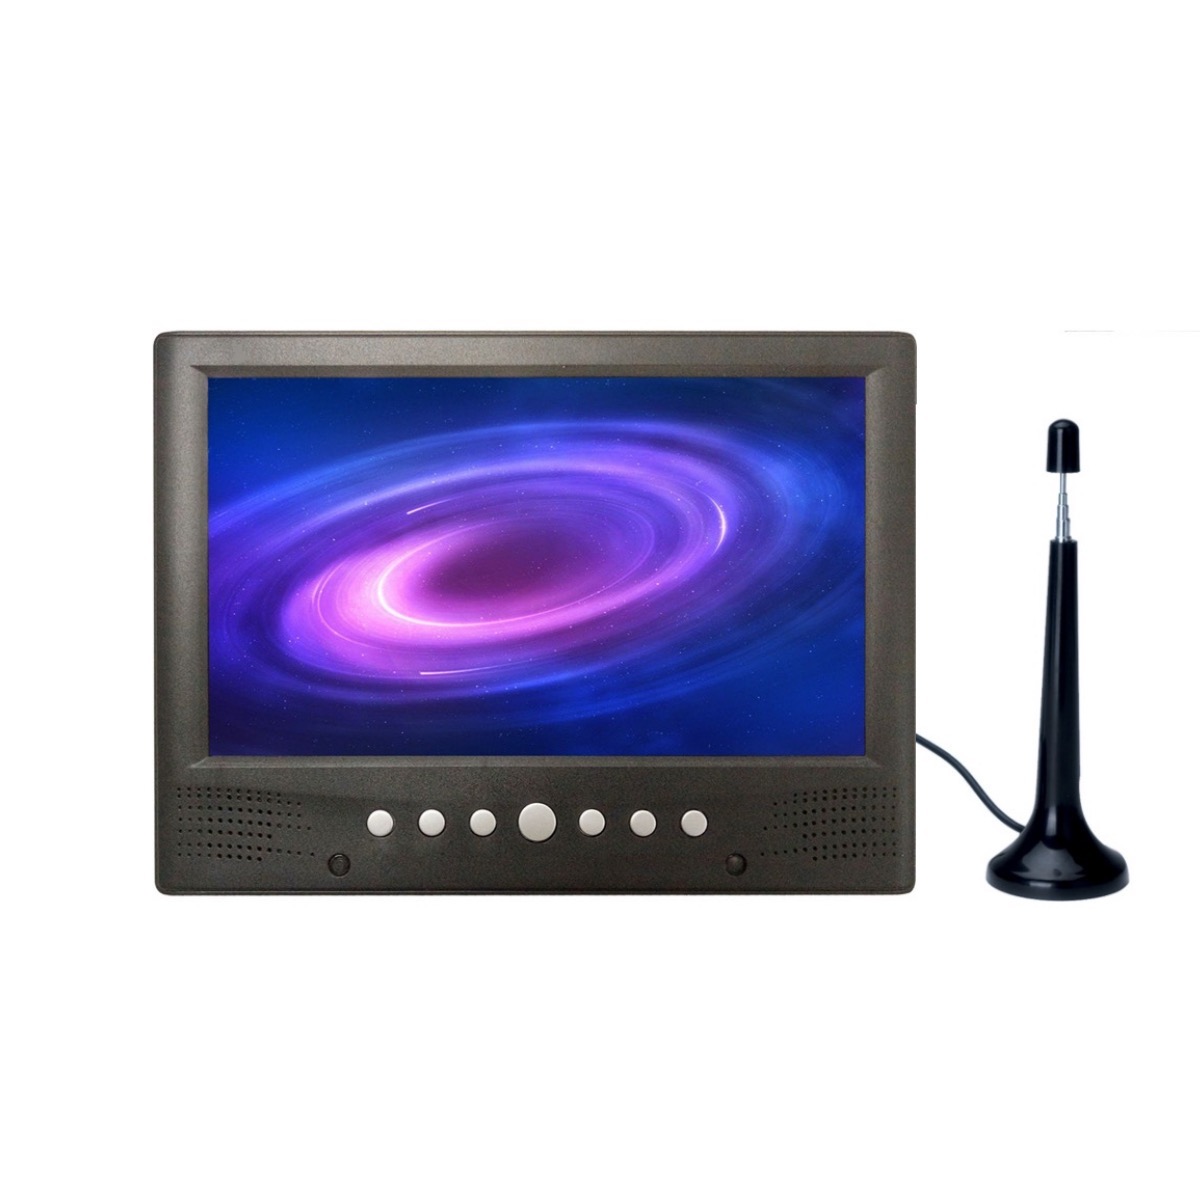   9 inch Portable TV DVBT2 / ISDB-T / ATSC Digital & Analog - HA192